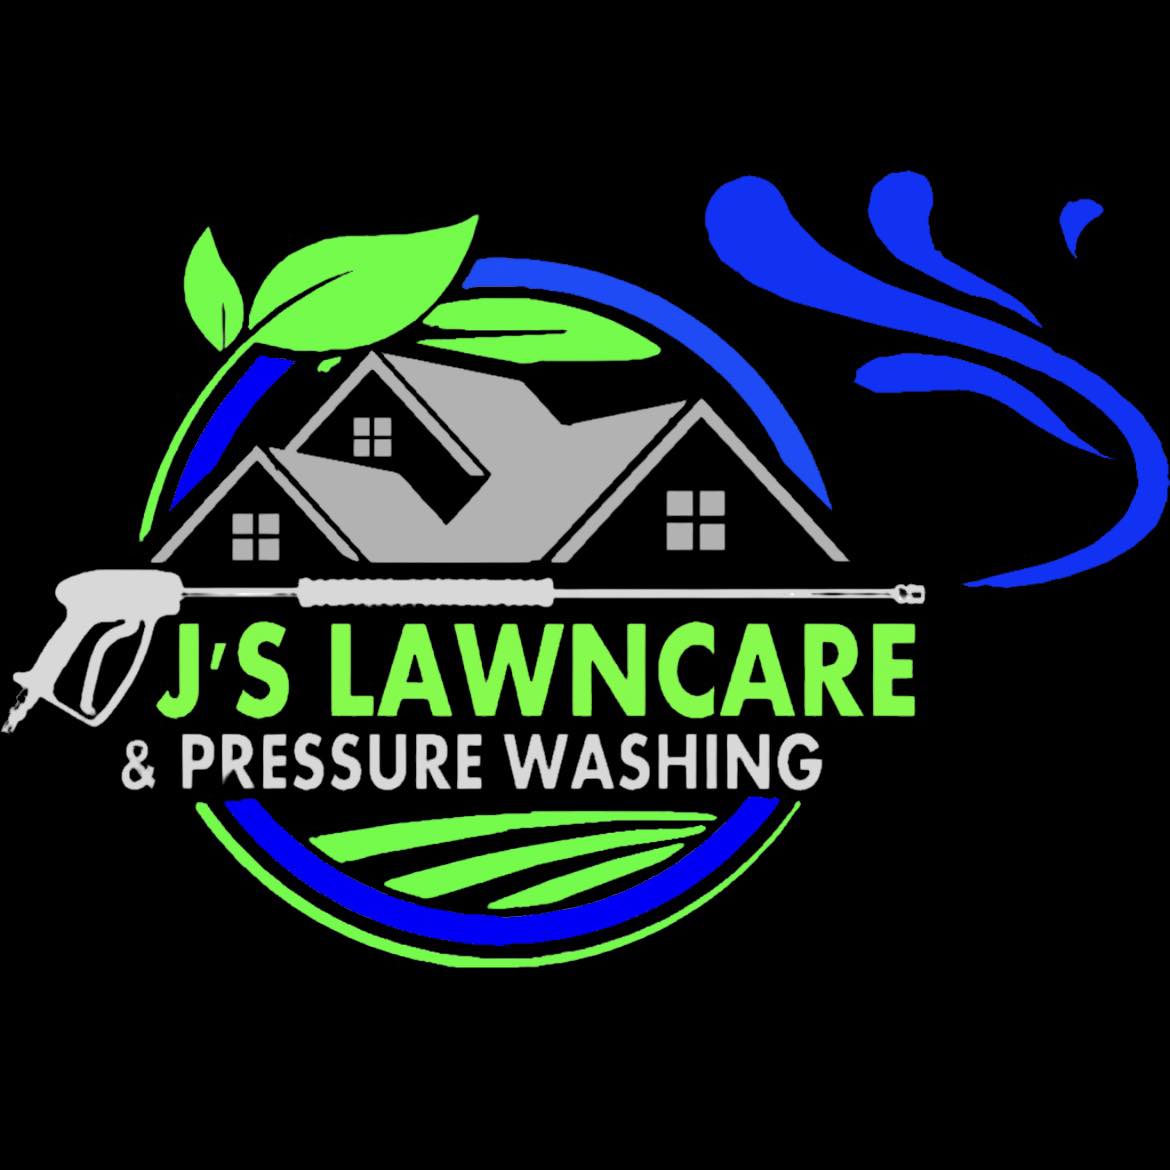 J’s Lawncare & Pressure Washing